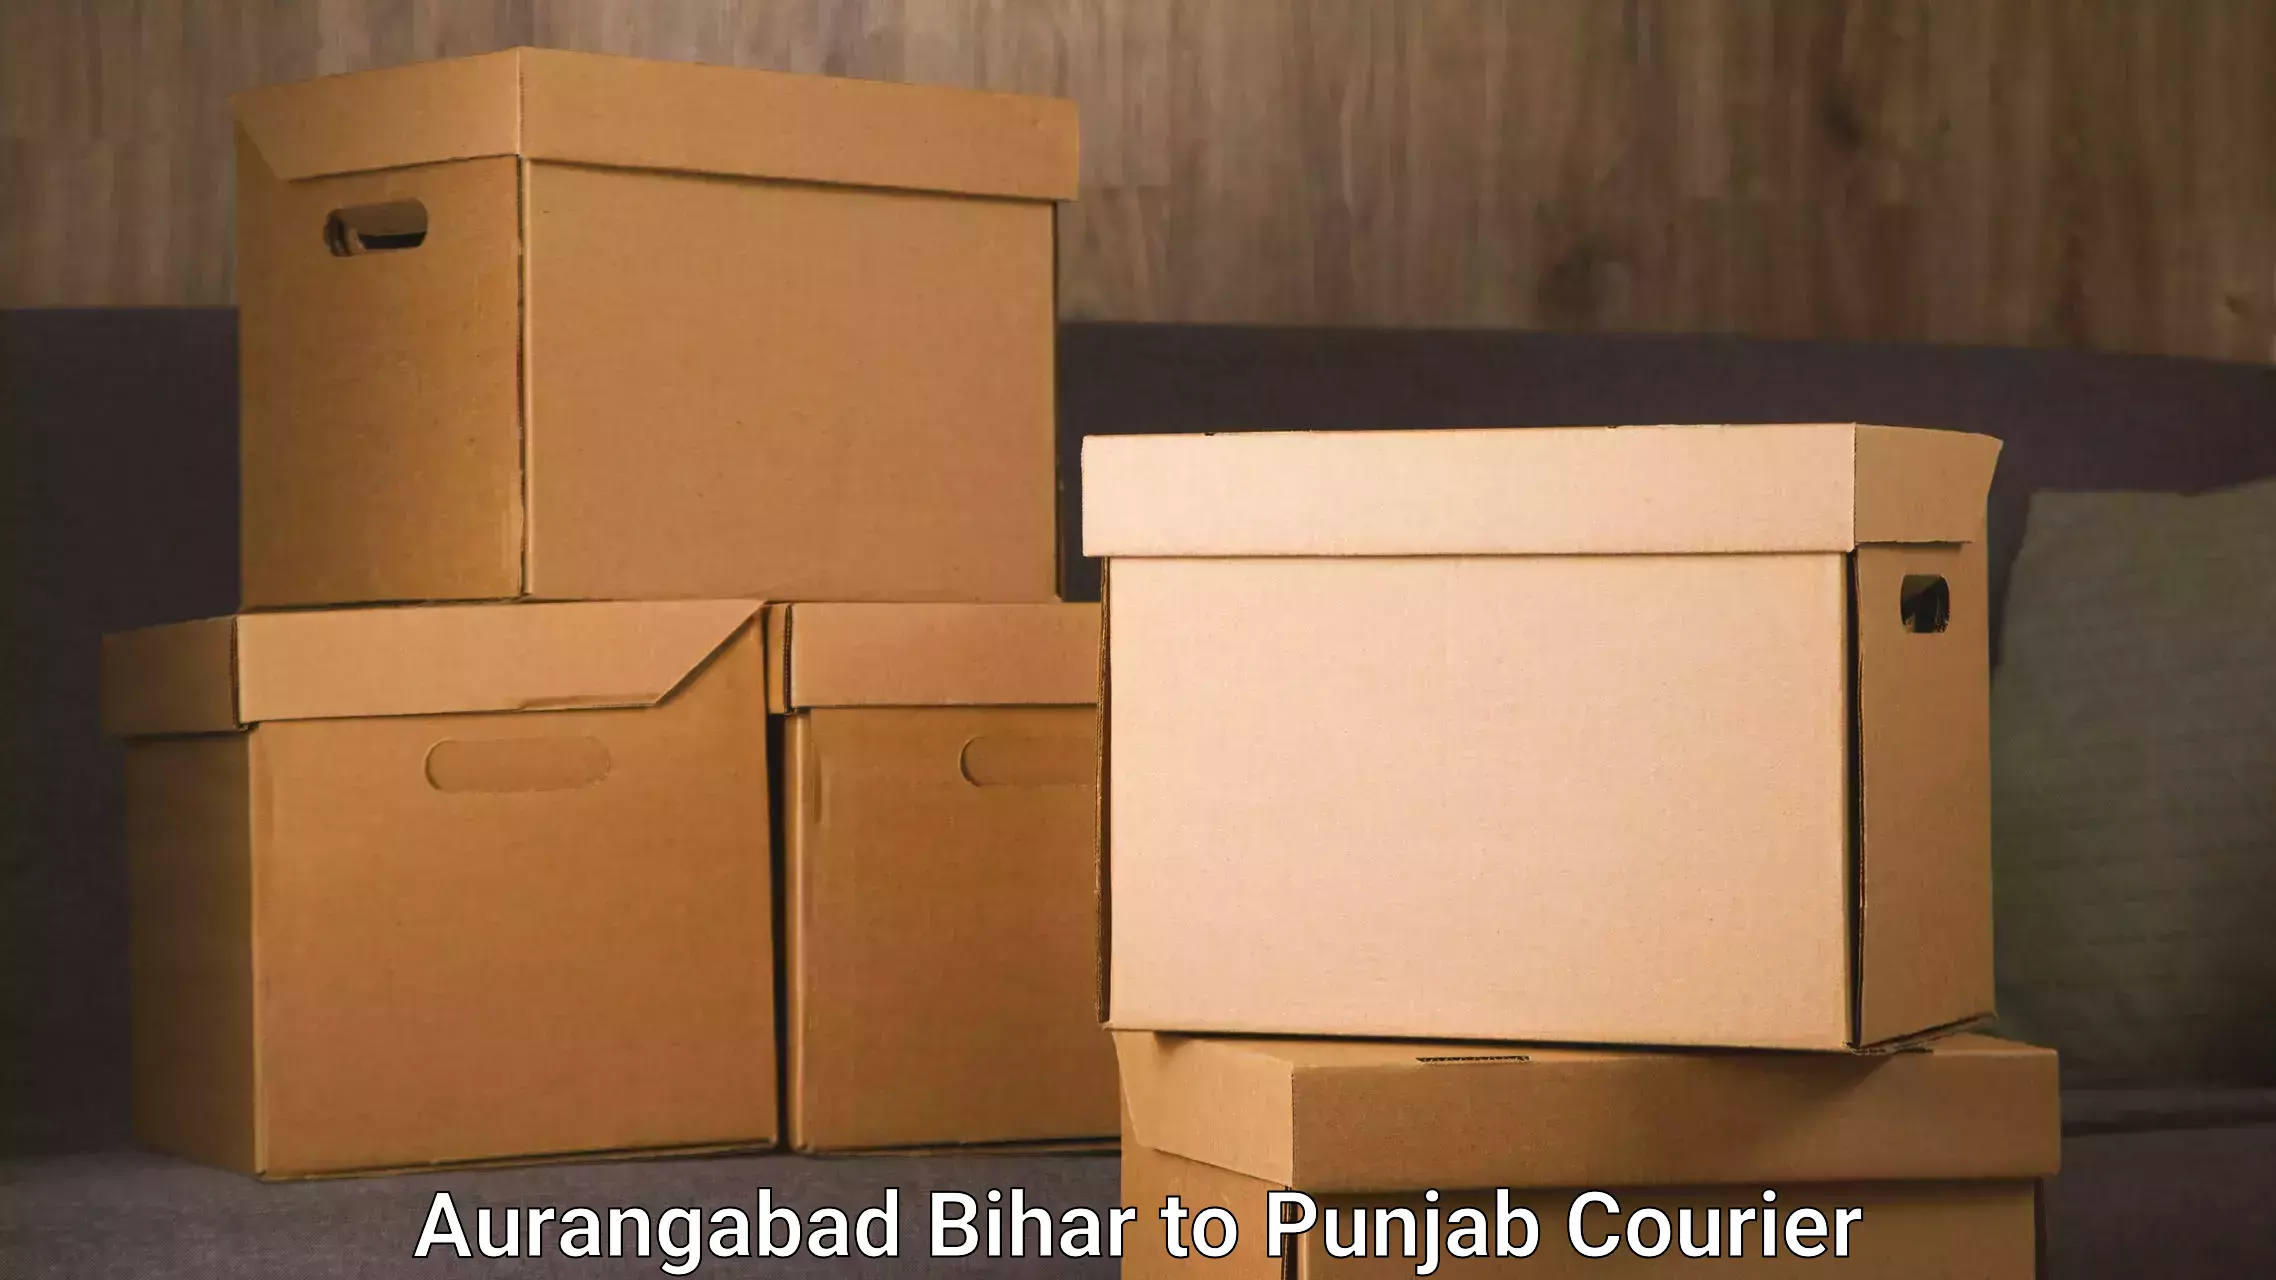 Furniture transport specialists Aurangabad Bihar to Punjab